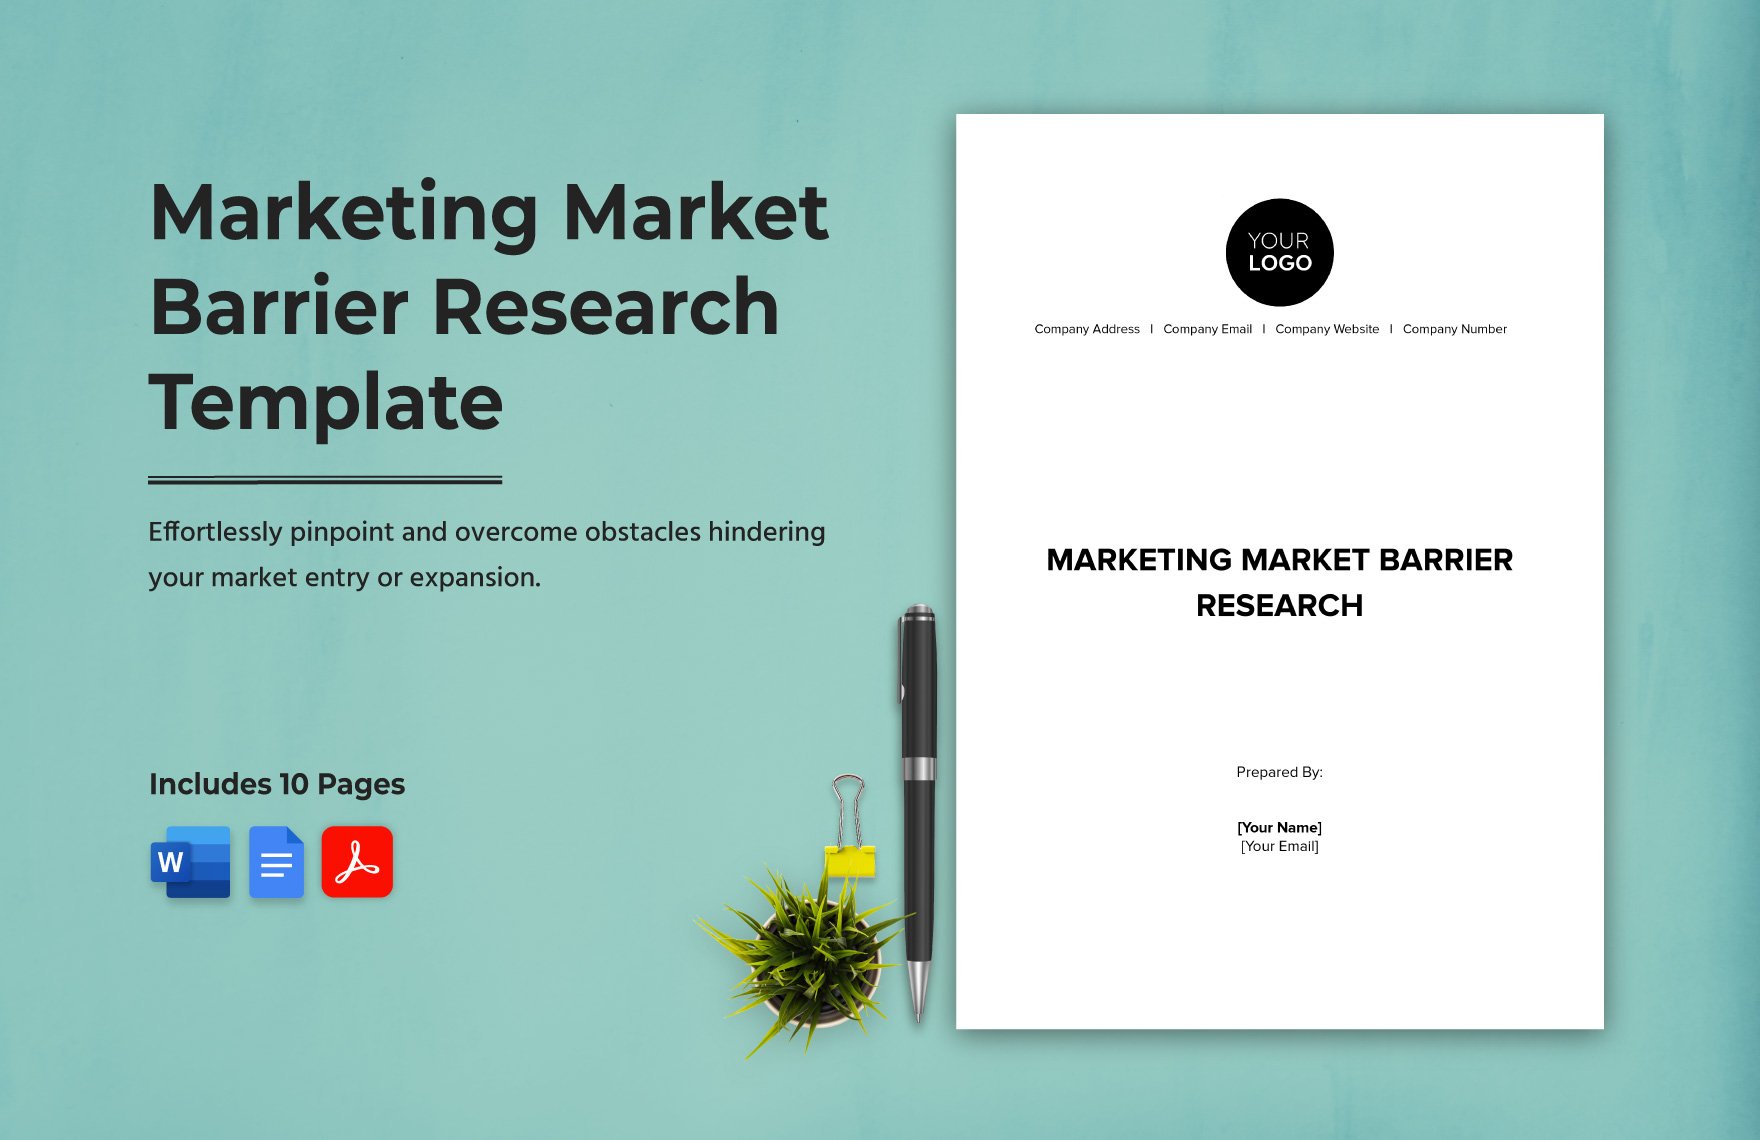 Marketing Market Barrier Research Template